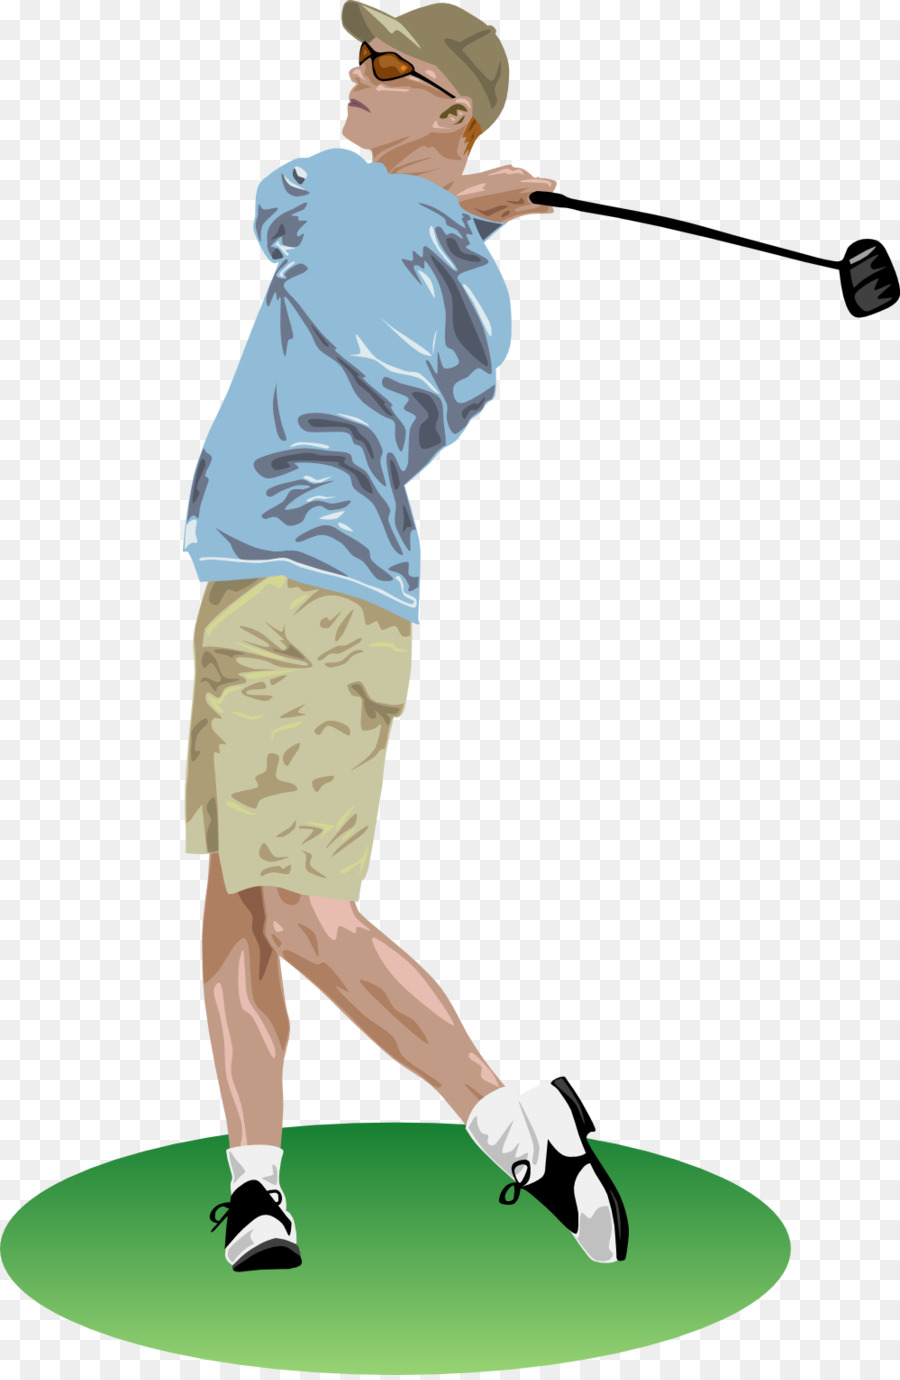 golfer clipart golf game